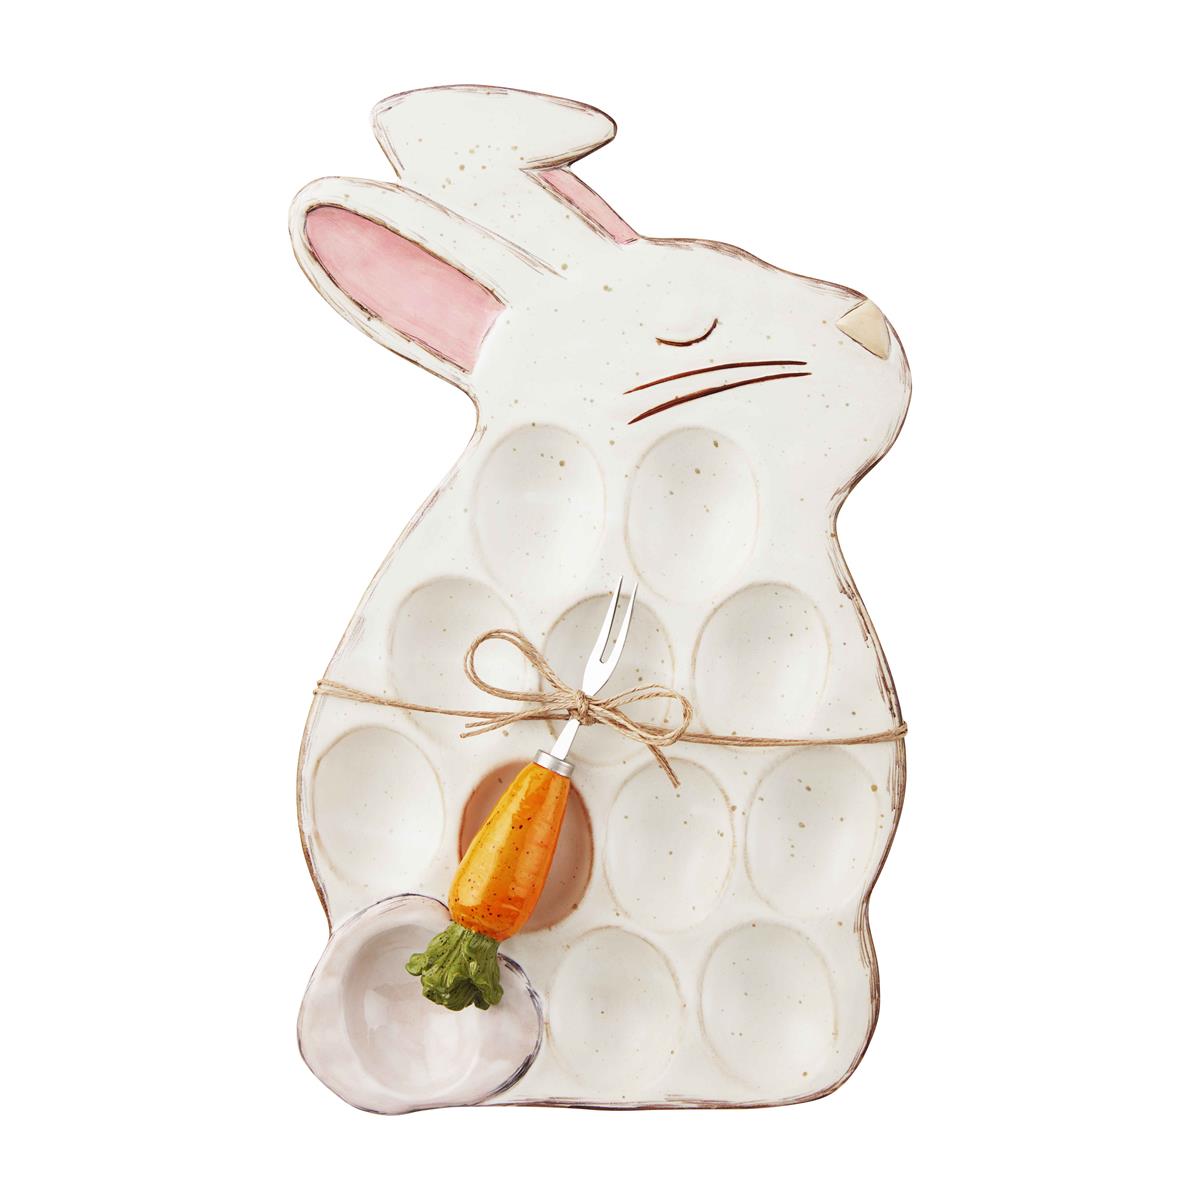 Bunny Deviled Egg Tray Set